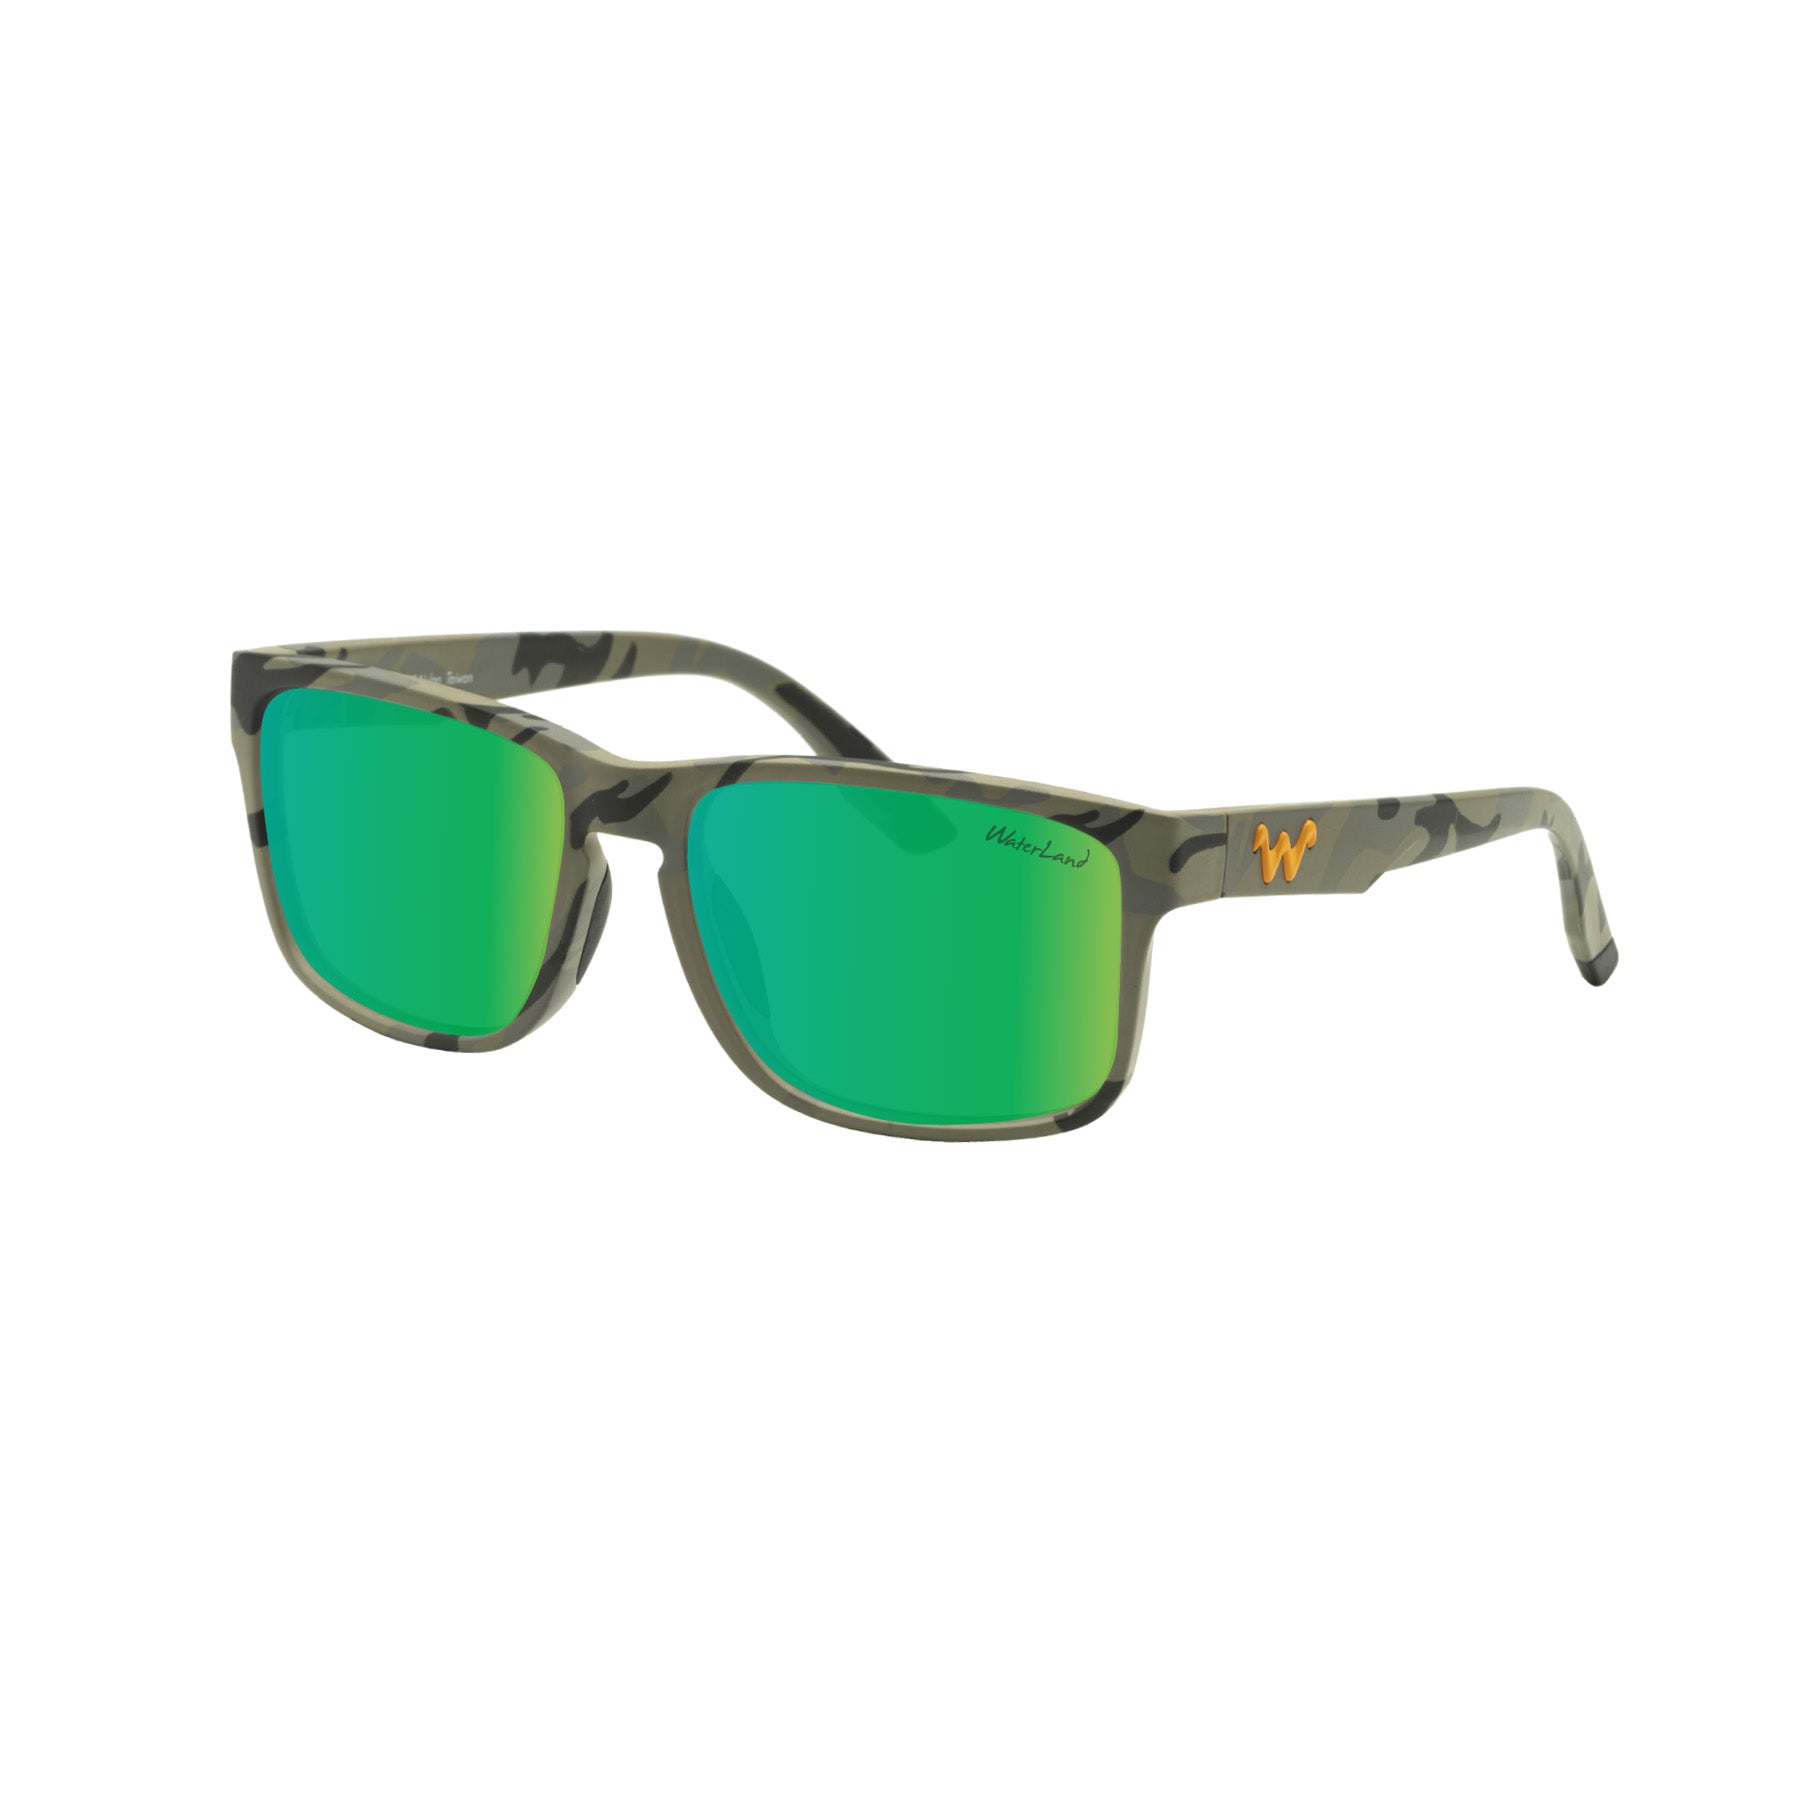 Waterland Polarized Sunglasses - Sobro - Ops Camo